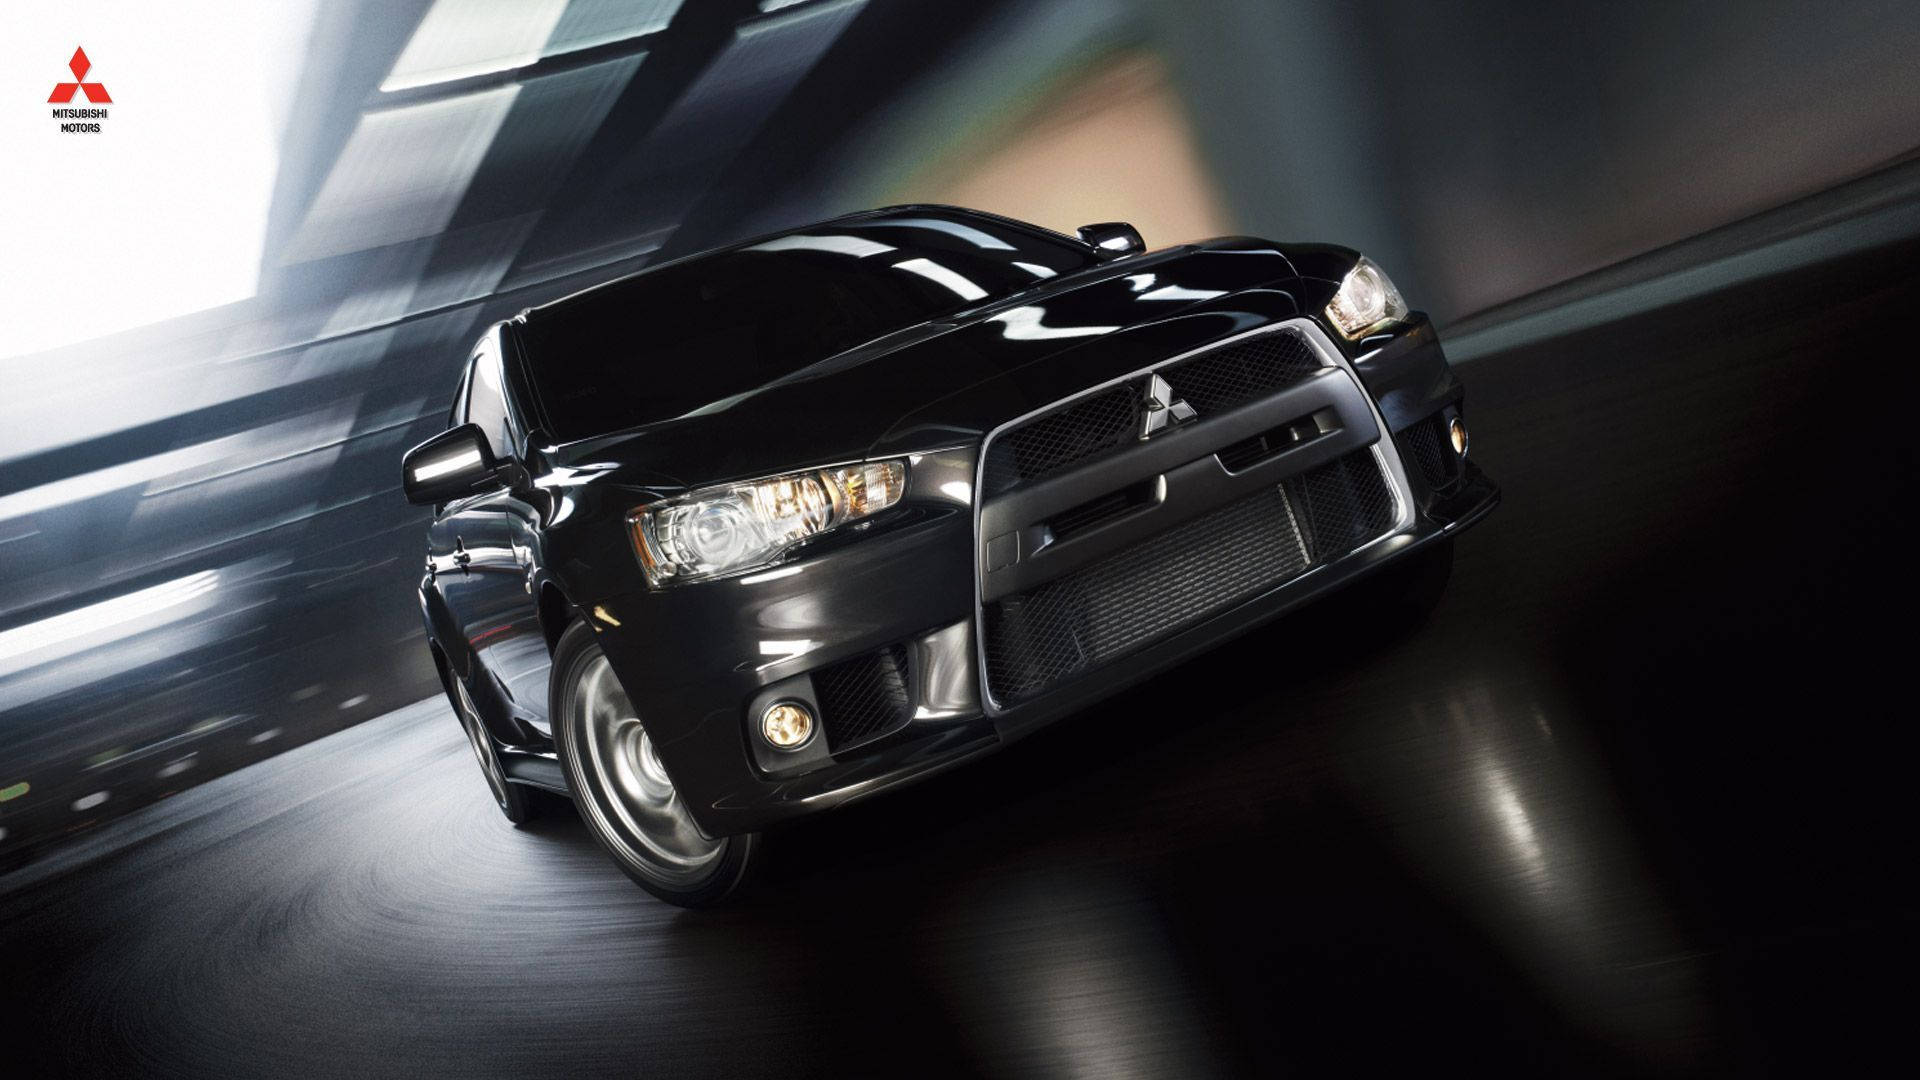 Black Mitsubishi Lancer Evo Drifting Background